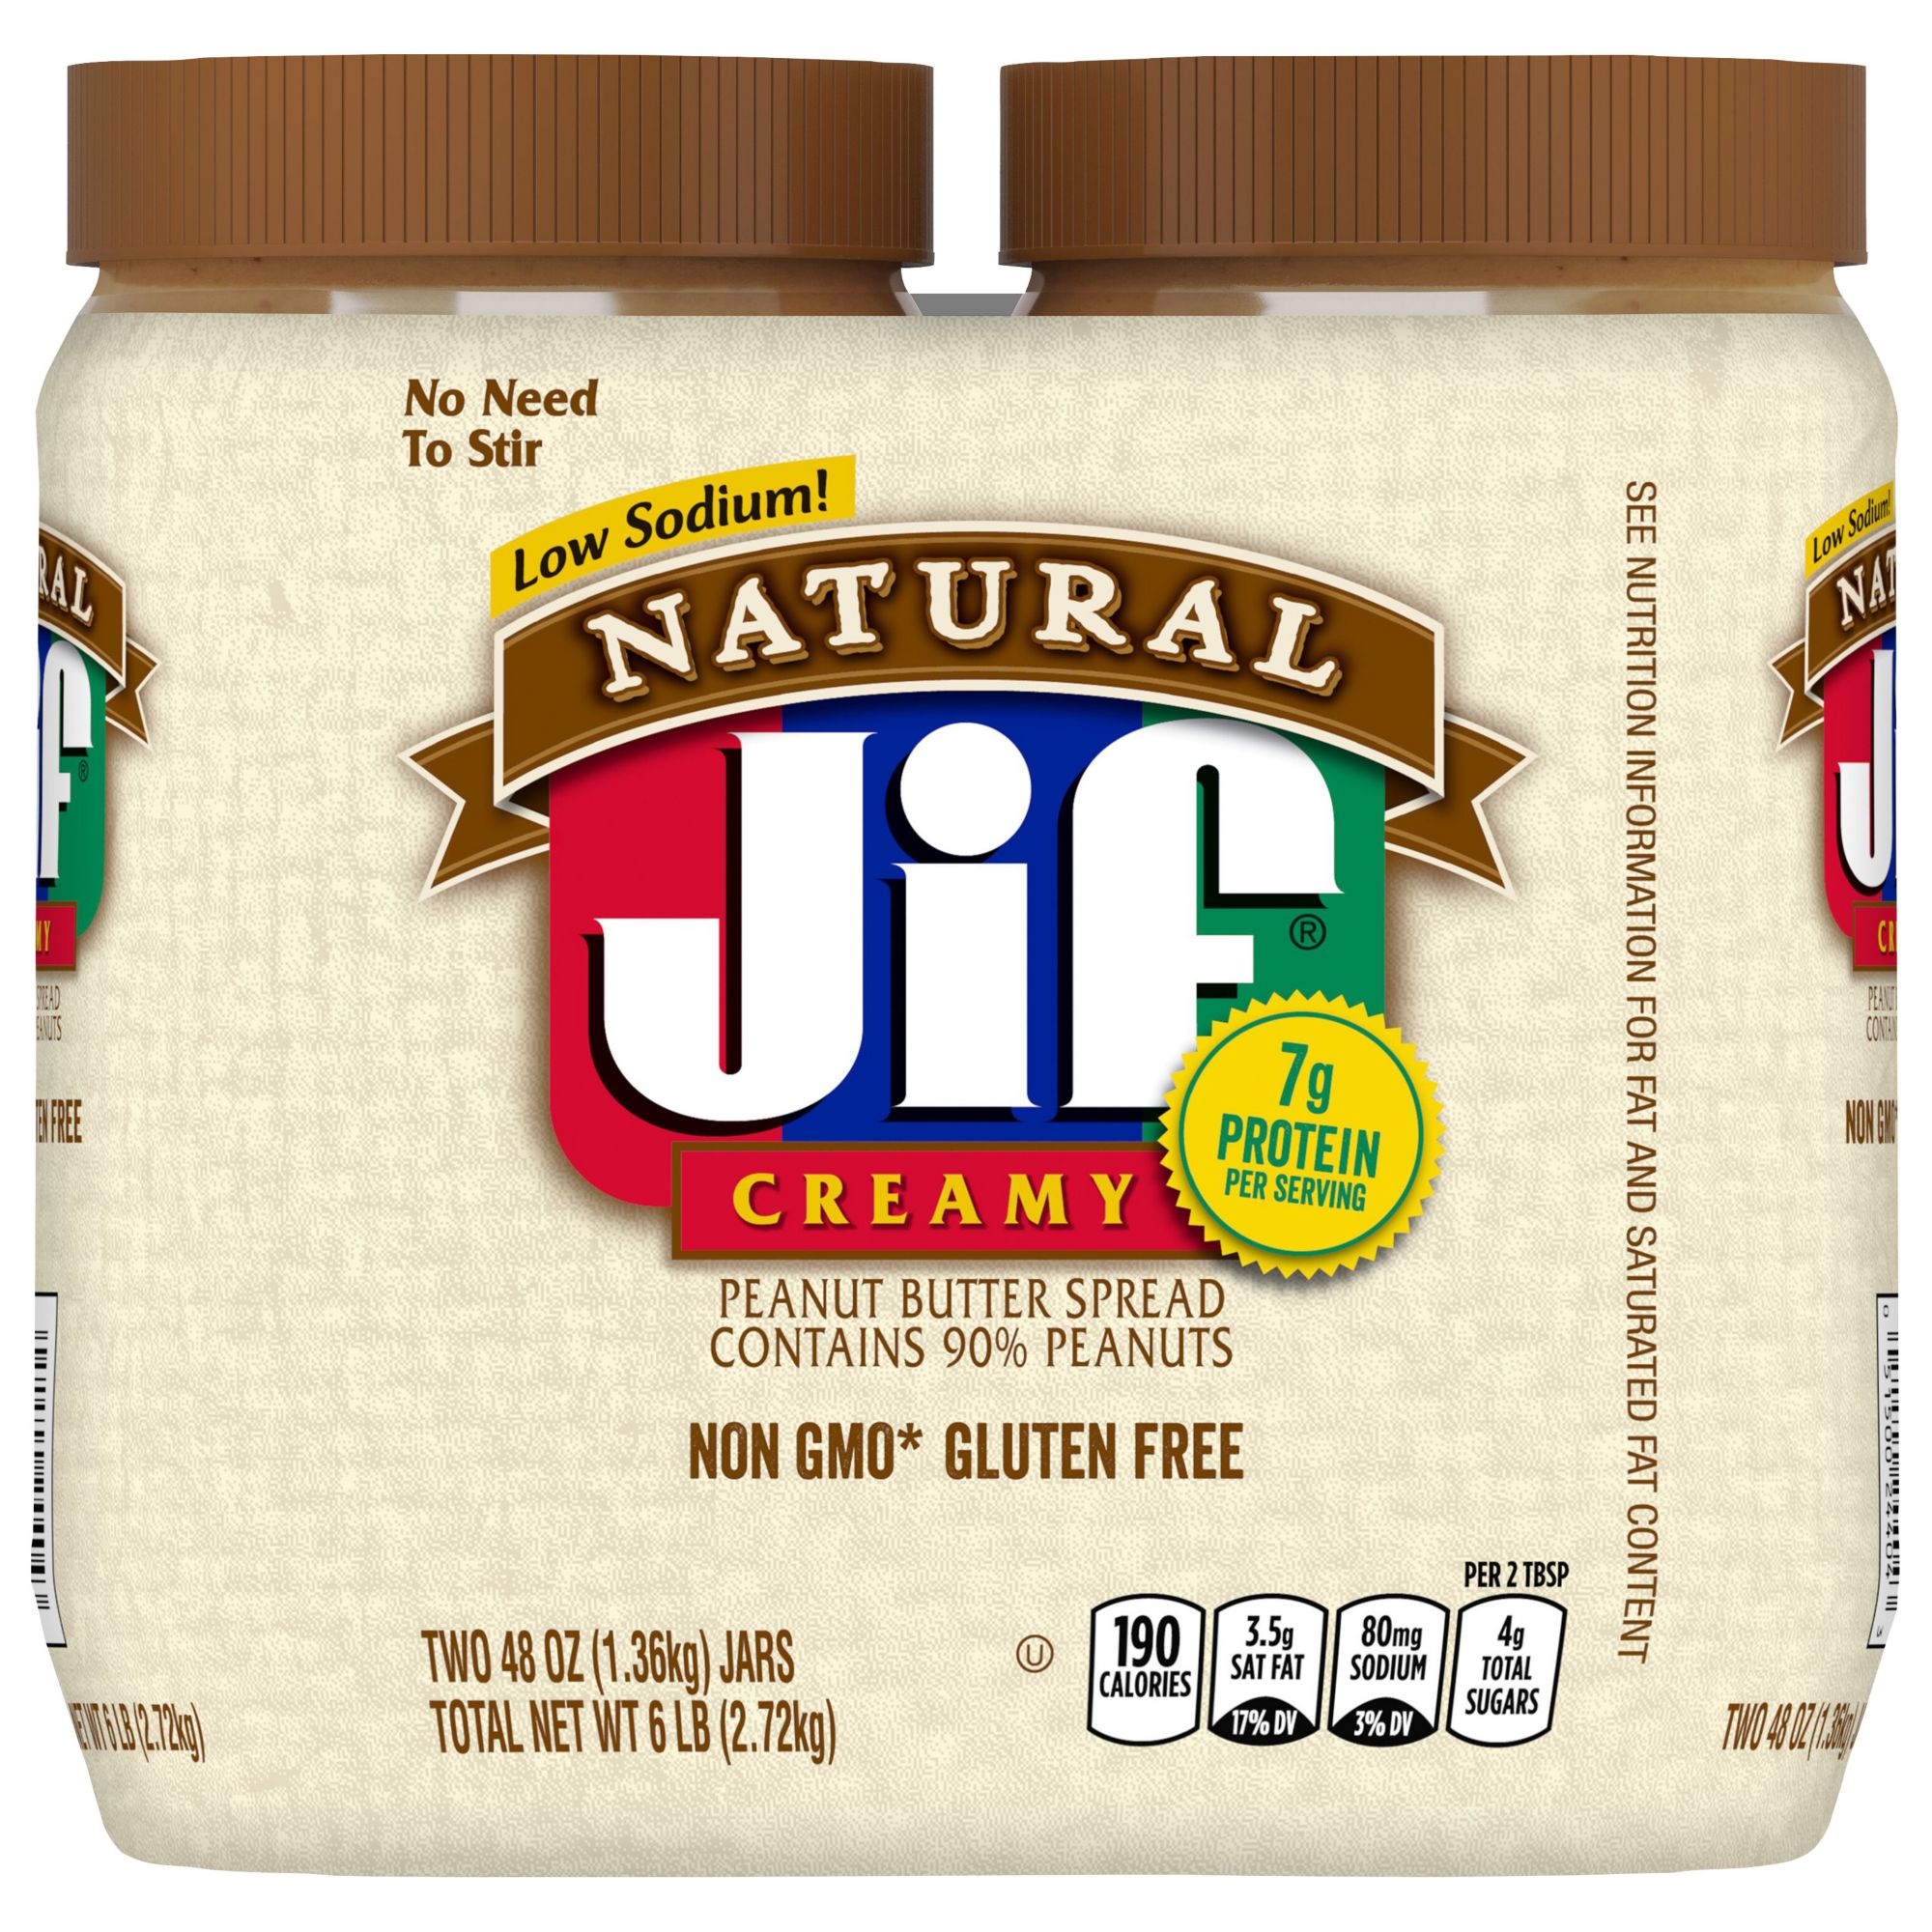 Jif Natural Creamy Peanut Butter, 2pk 48 oz.